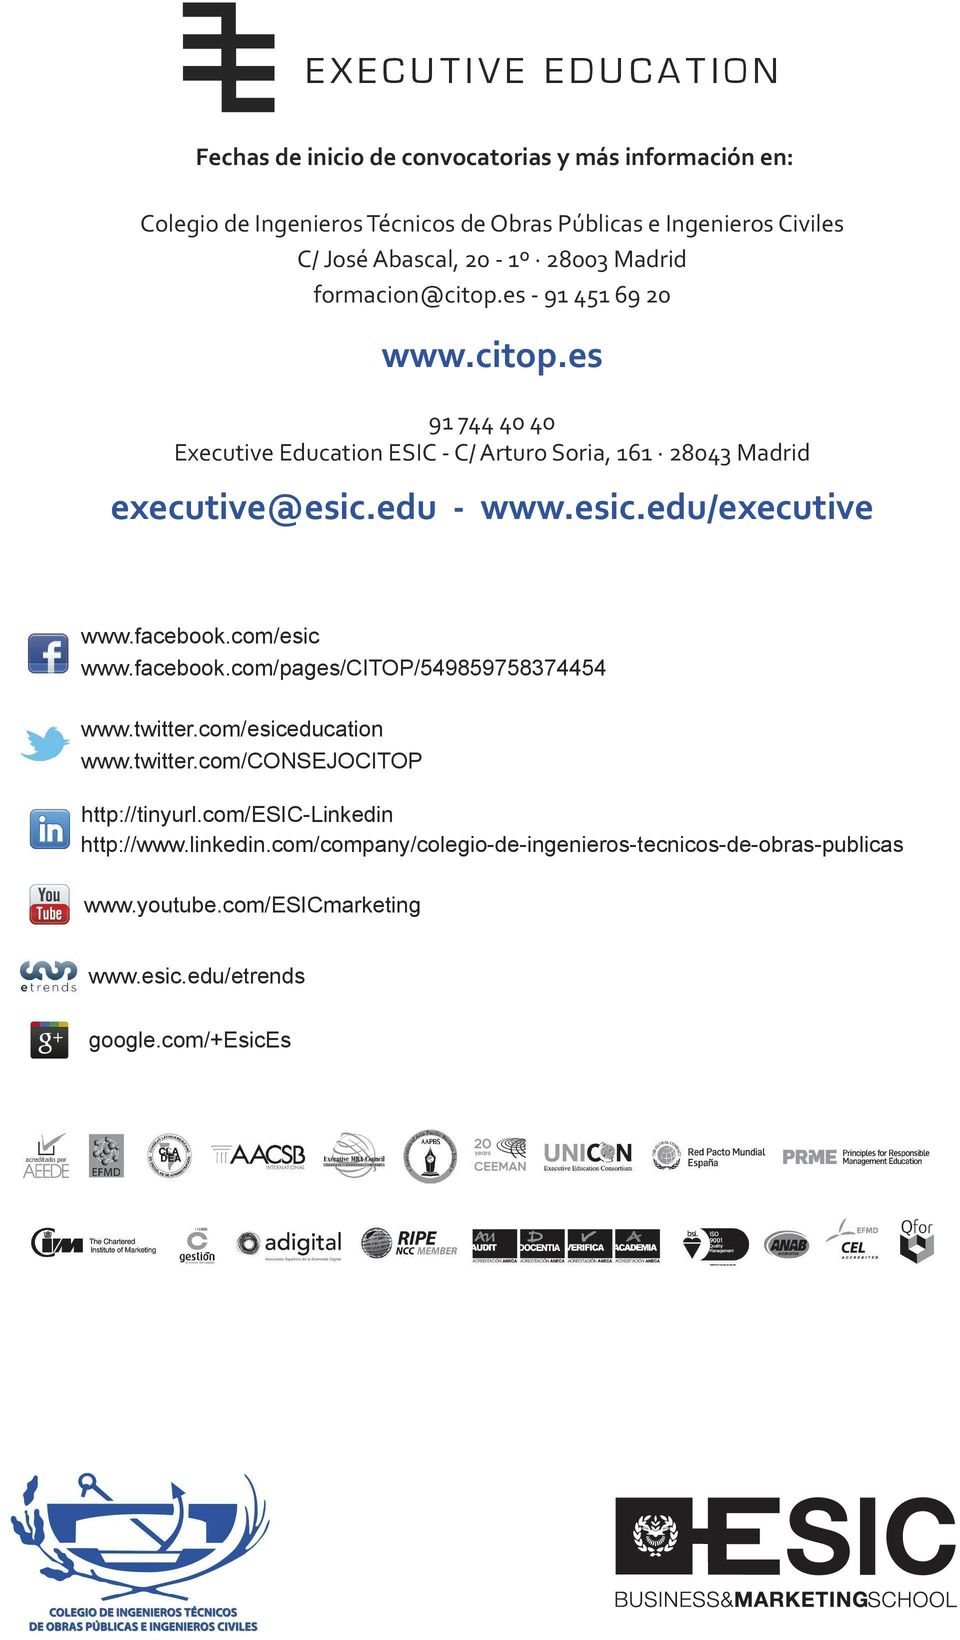 edu - www.esic.edu/executive www.facebook.com/esic www.facebook.com/pages/citop/549859758374454 www.twitter.com/esiceducation www.twitter.com/consejocitop http://tinyurl.